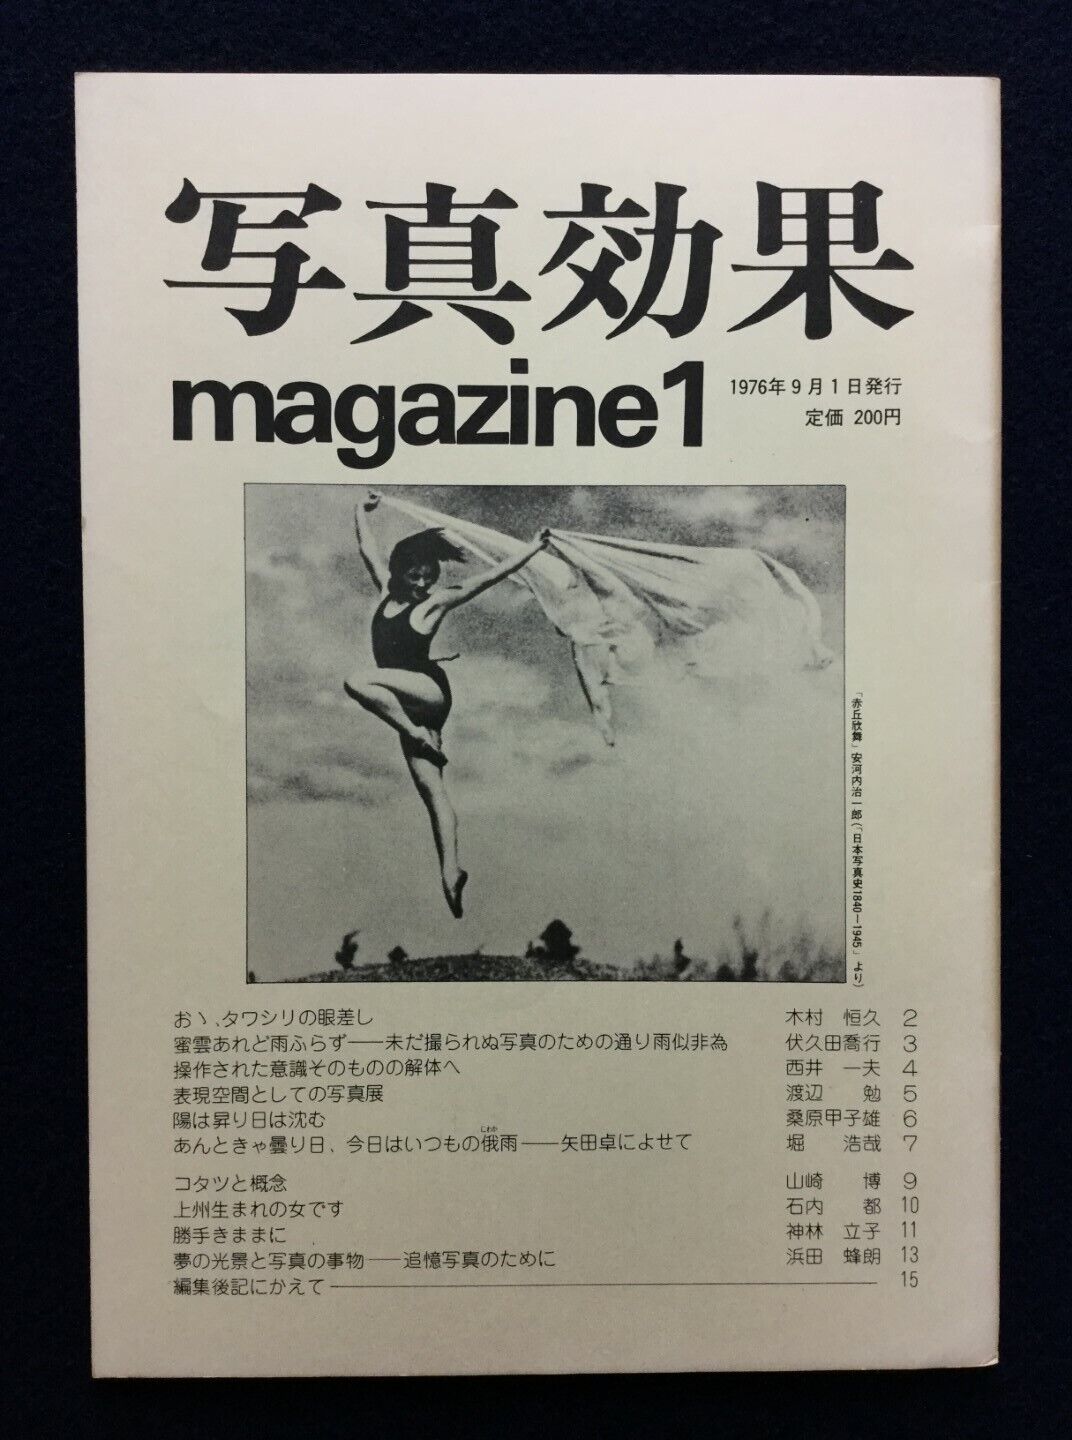 STUDENT COLLECTIVE Shashin Koka, Photo Magazine 1 1976 Japanese Book Nieuw binnen, echte garantie